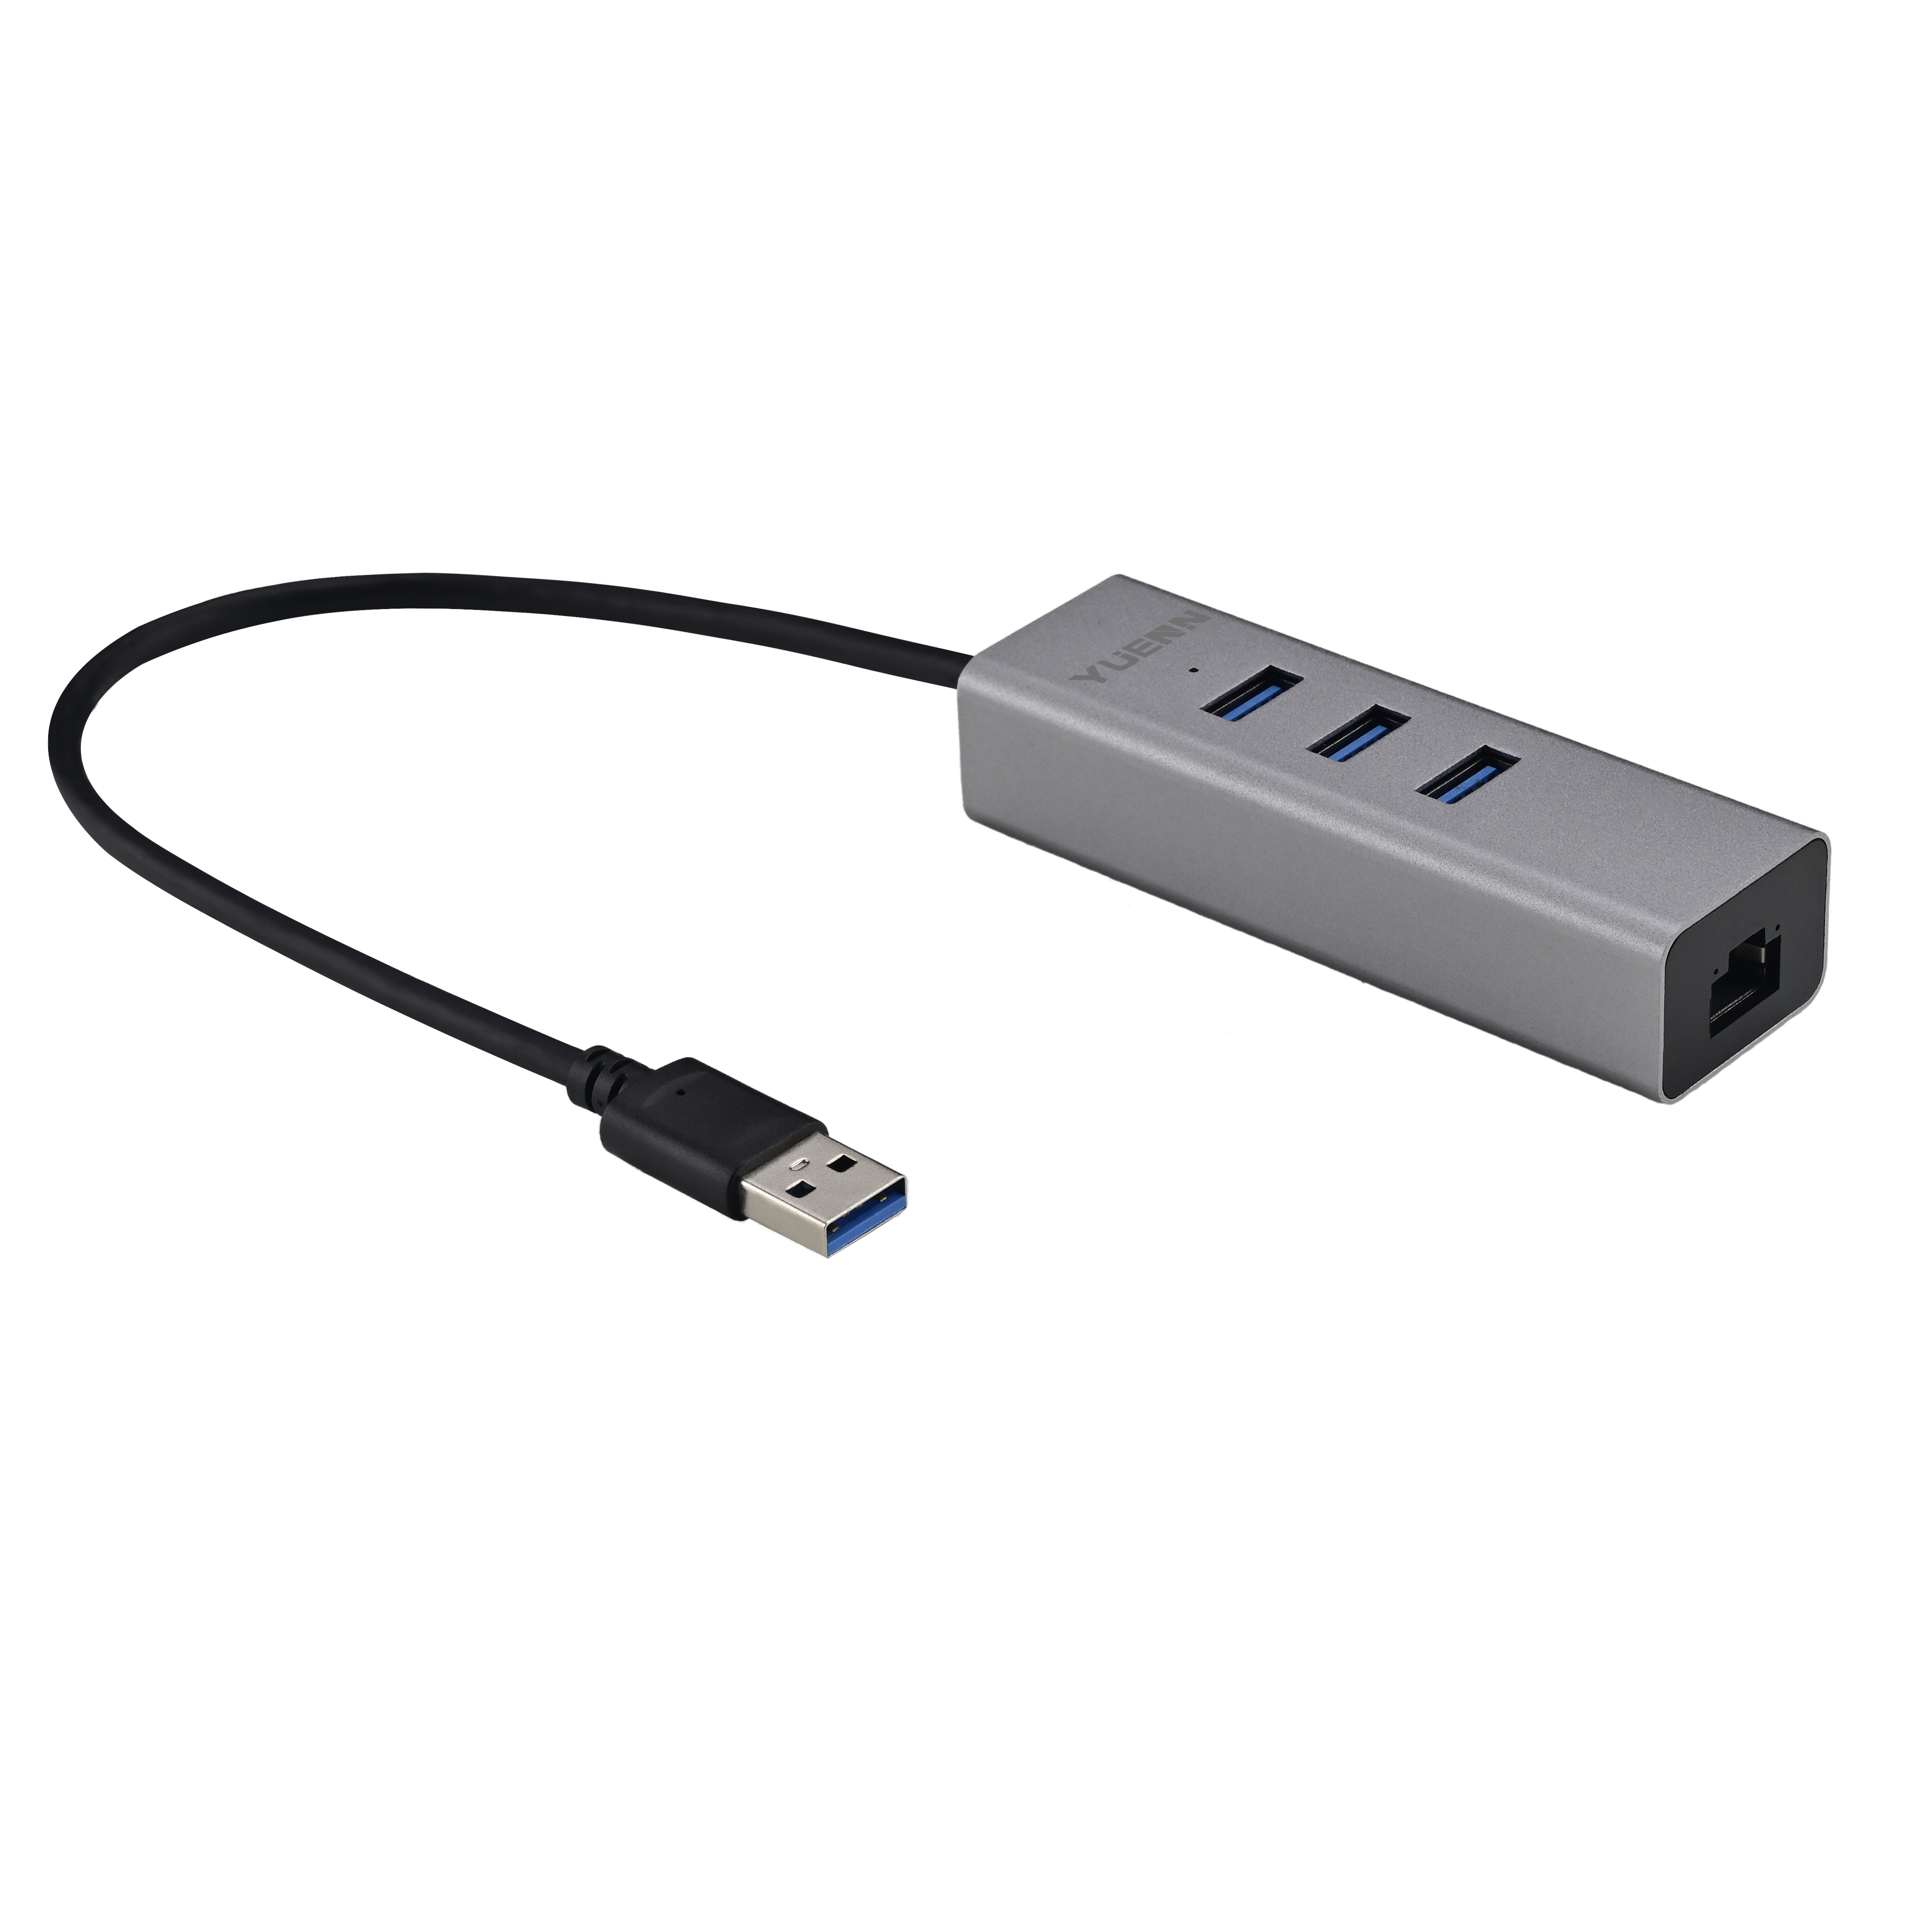 USB 3.0 hub 3 Port + Gigabit Ethernet Adapter, Aluminum